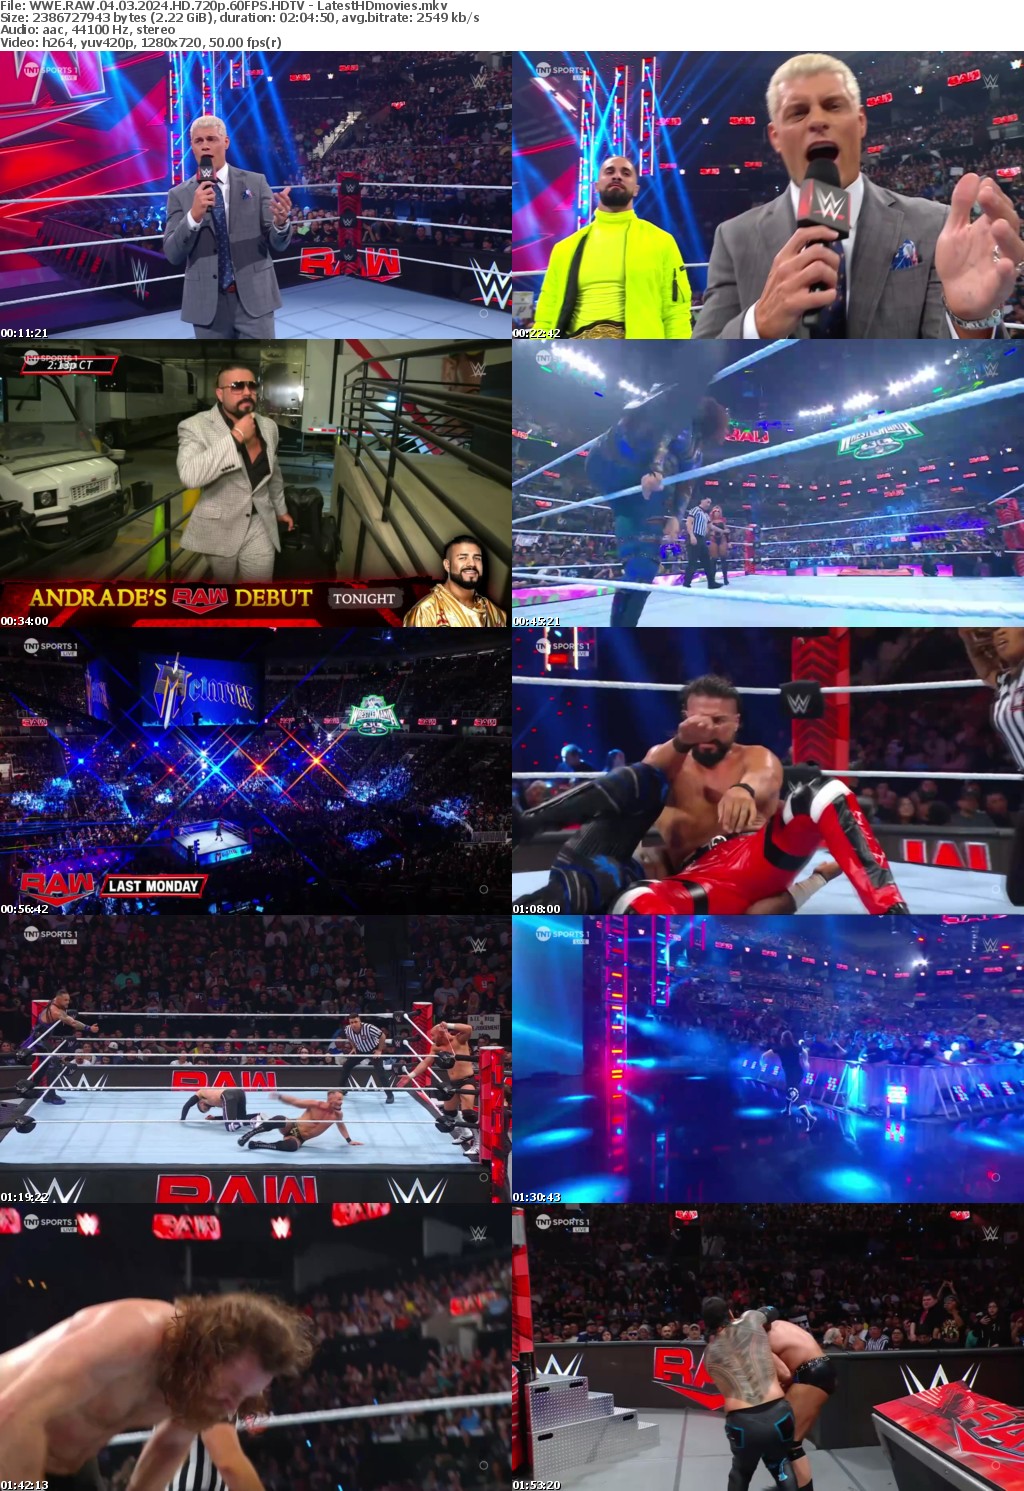 WWE RAW 04 03 2024 720p HD 60FPS HDTV Eng AAC - LatestHDmovies